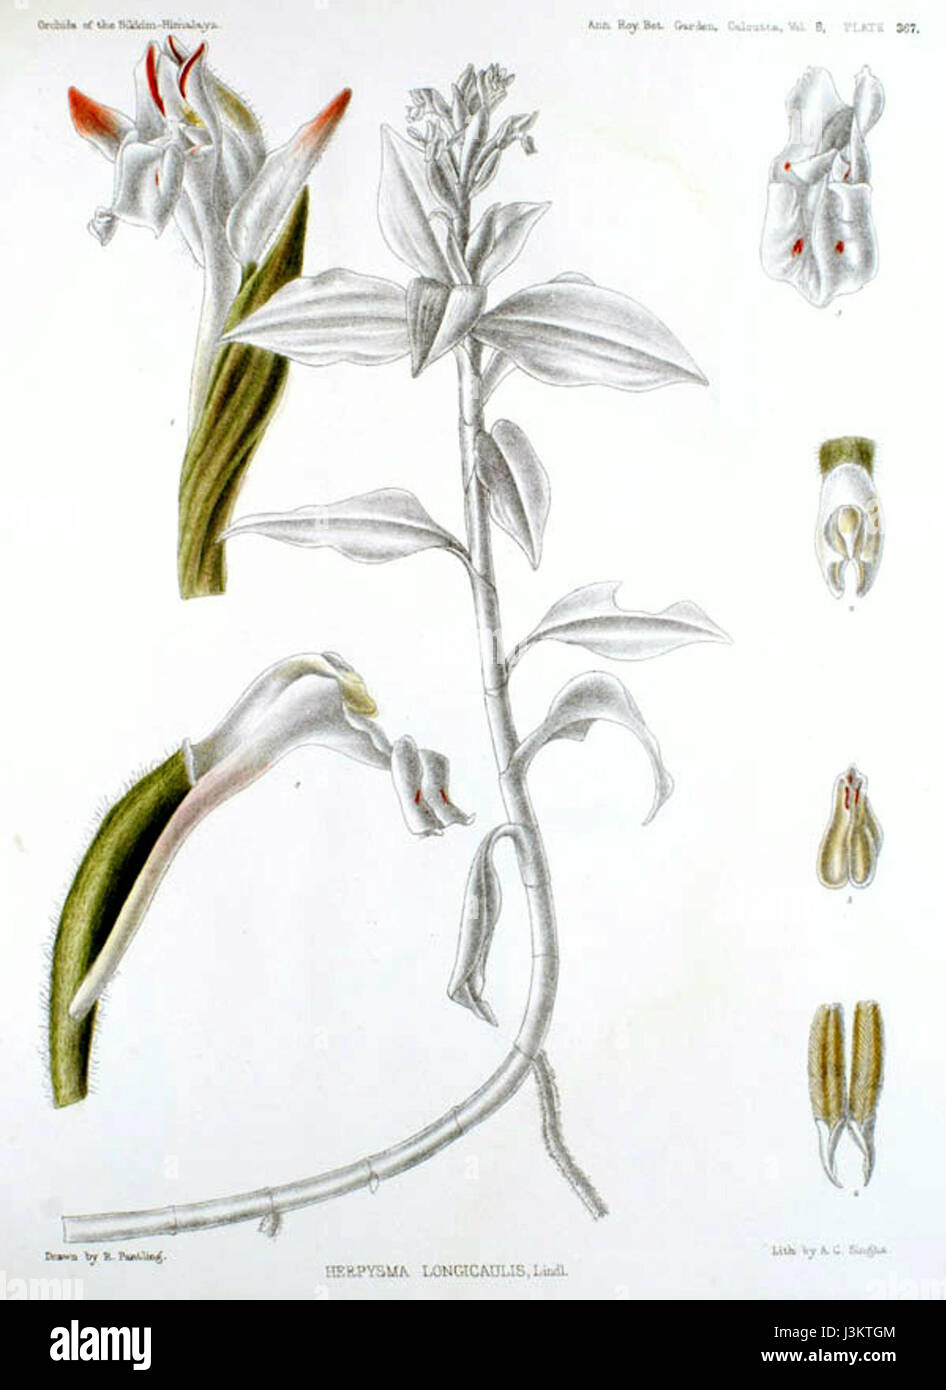 Herpysma longicaulis   The Orchids of the Sikkim Himalaya pl 367 (1898) Stock Photo